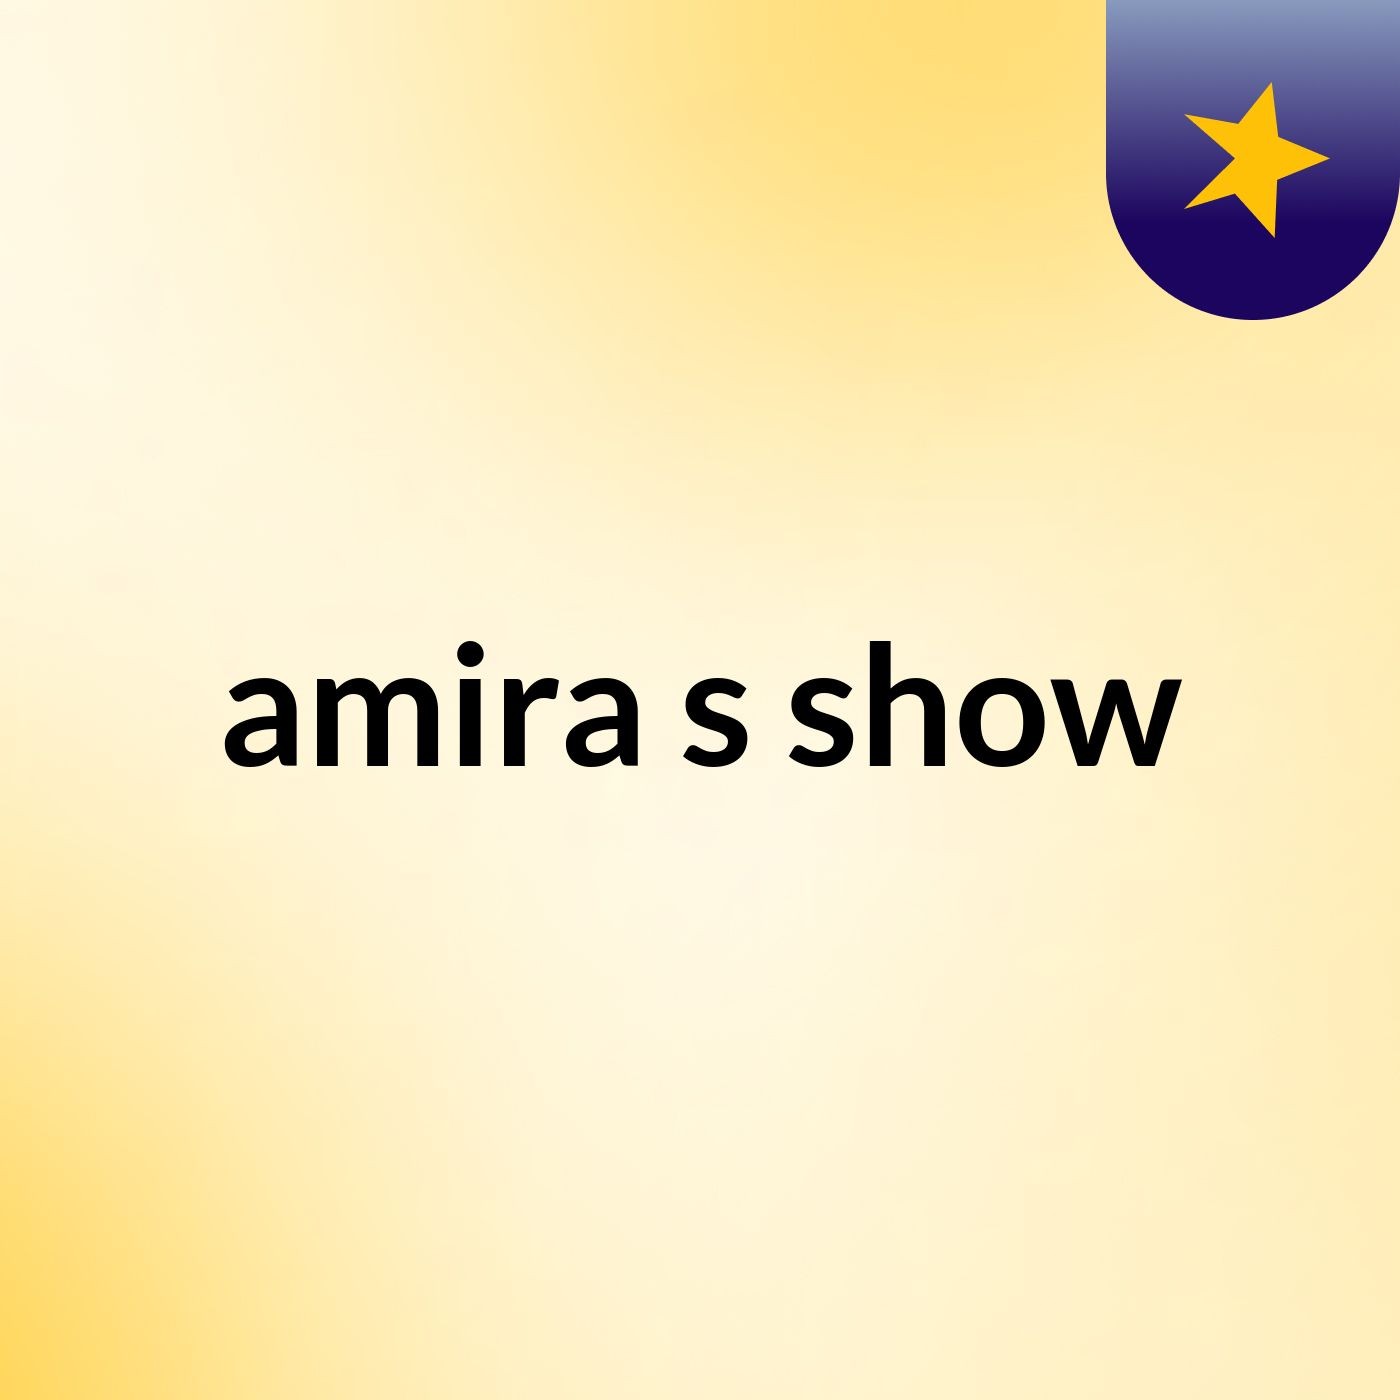 amira's show